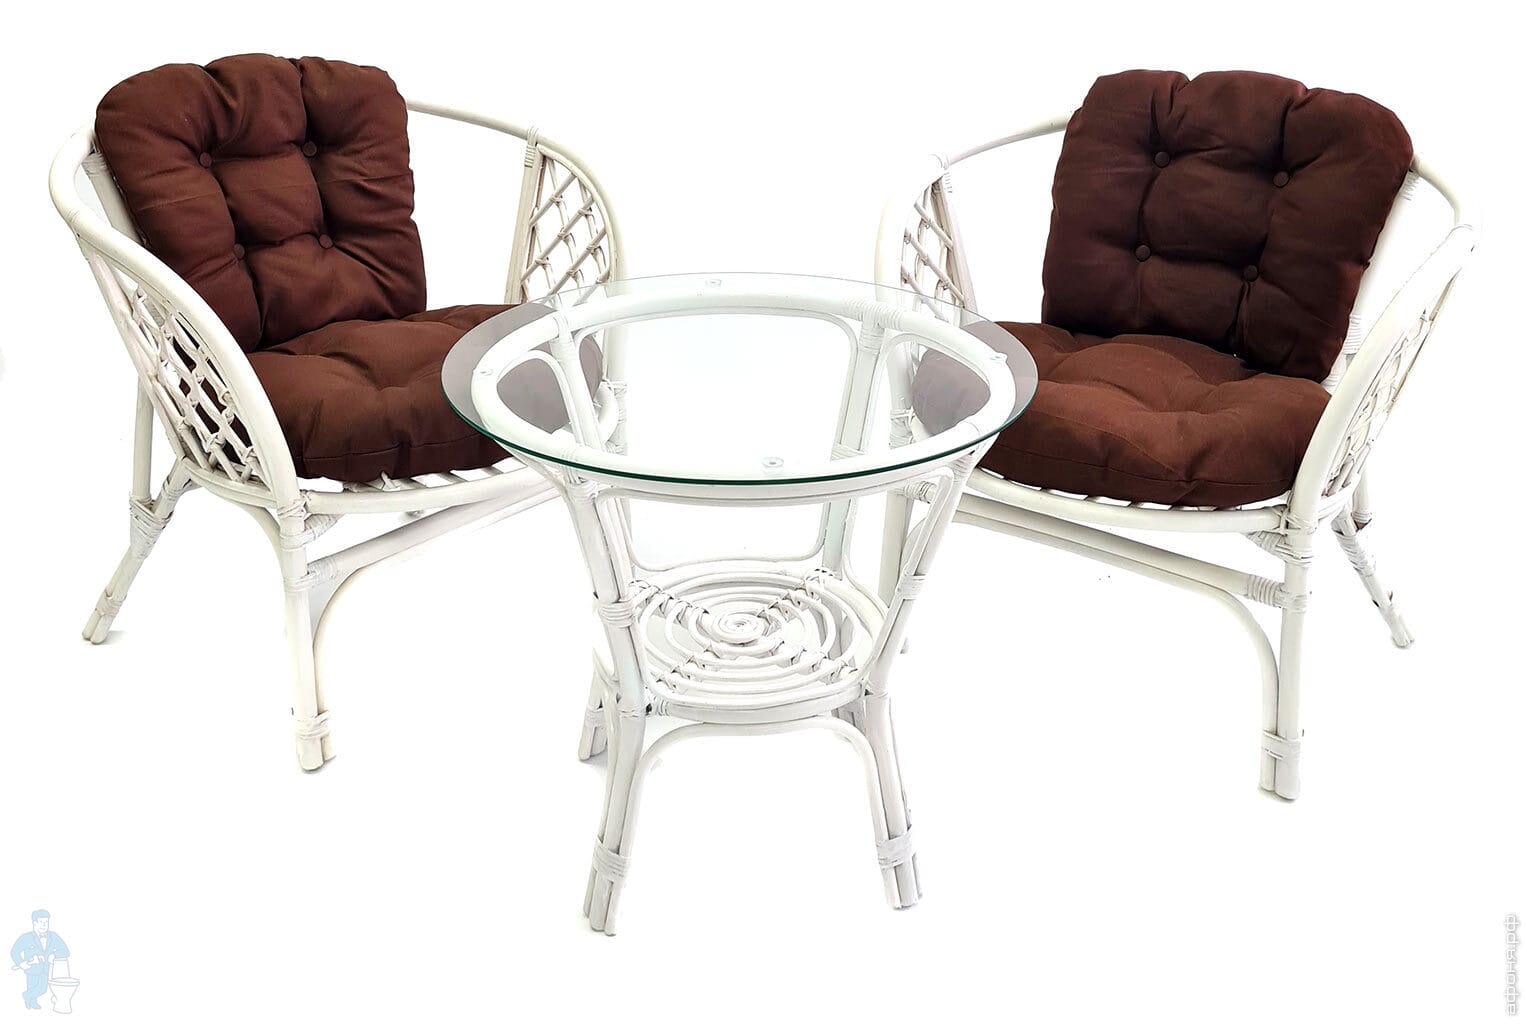 Комплект кофейный багама s стол 2 кресла диван подушка твил